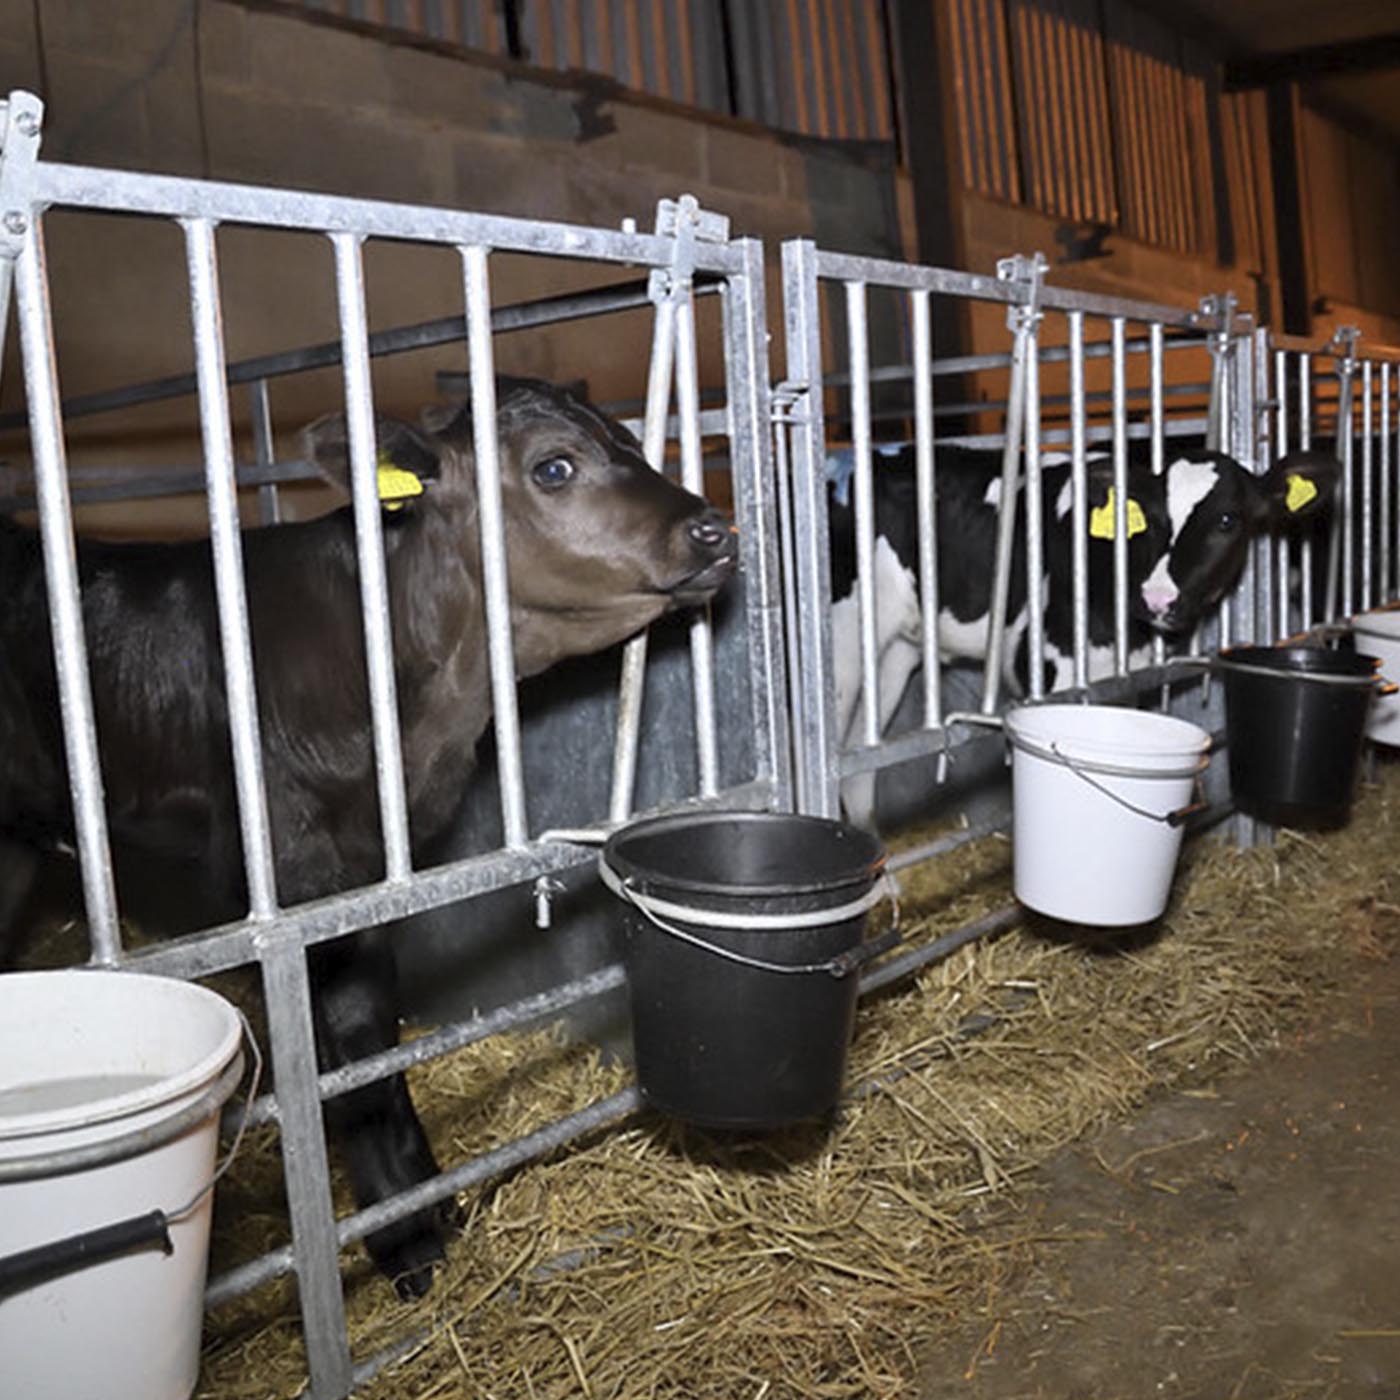 Mammal,Fence,Dairy cow,farmed animal,Animal shelter